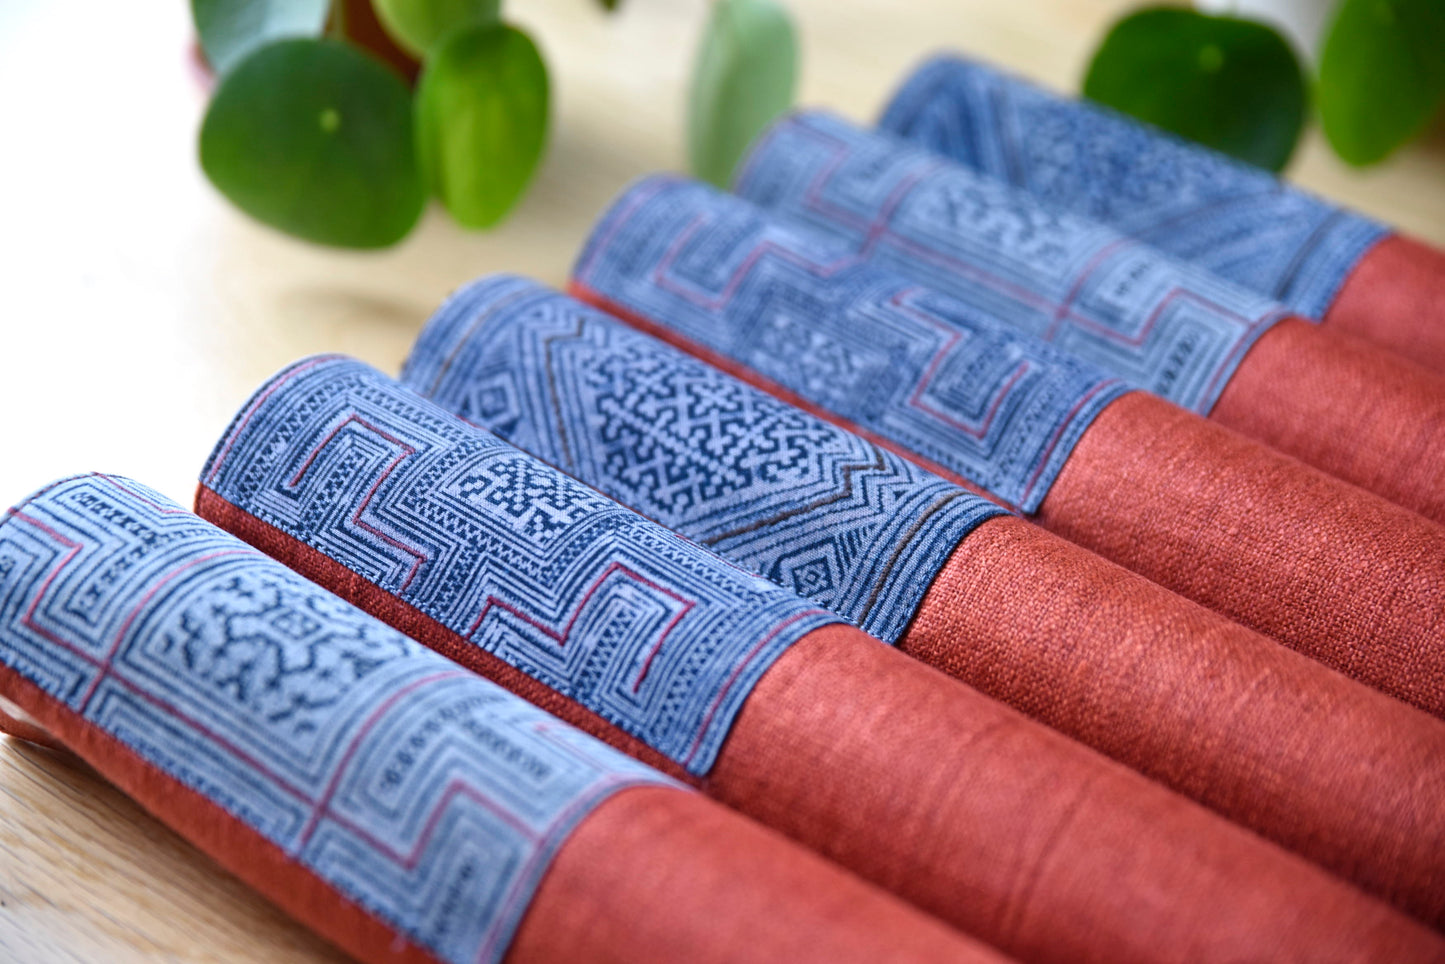 Bordeaux Red hemp placemat, vintage batik indigo patch, hand-woven hemp fabrics